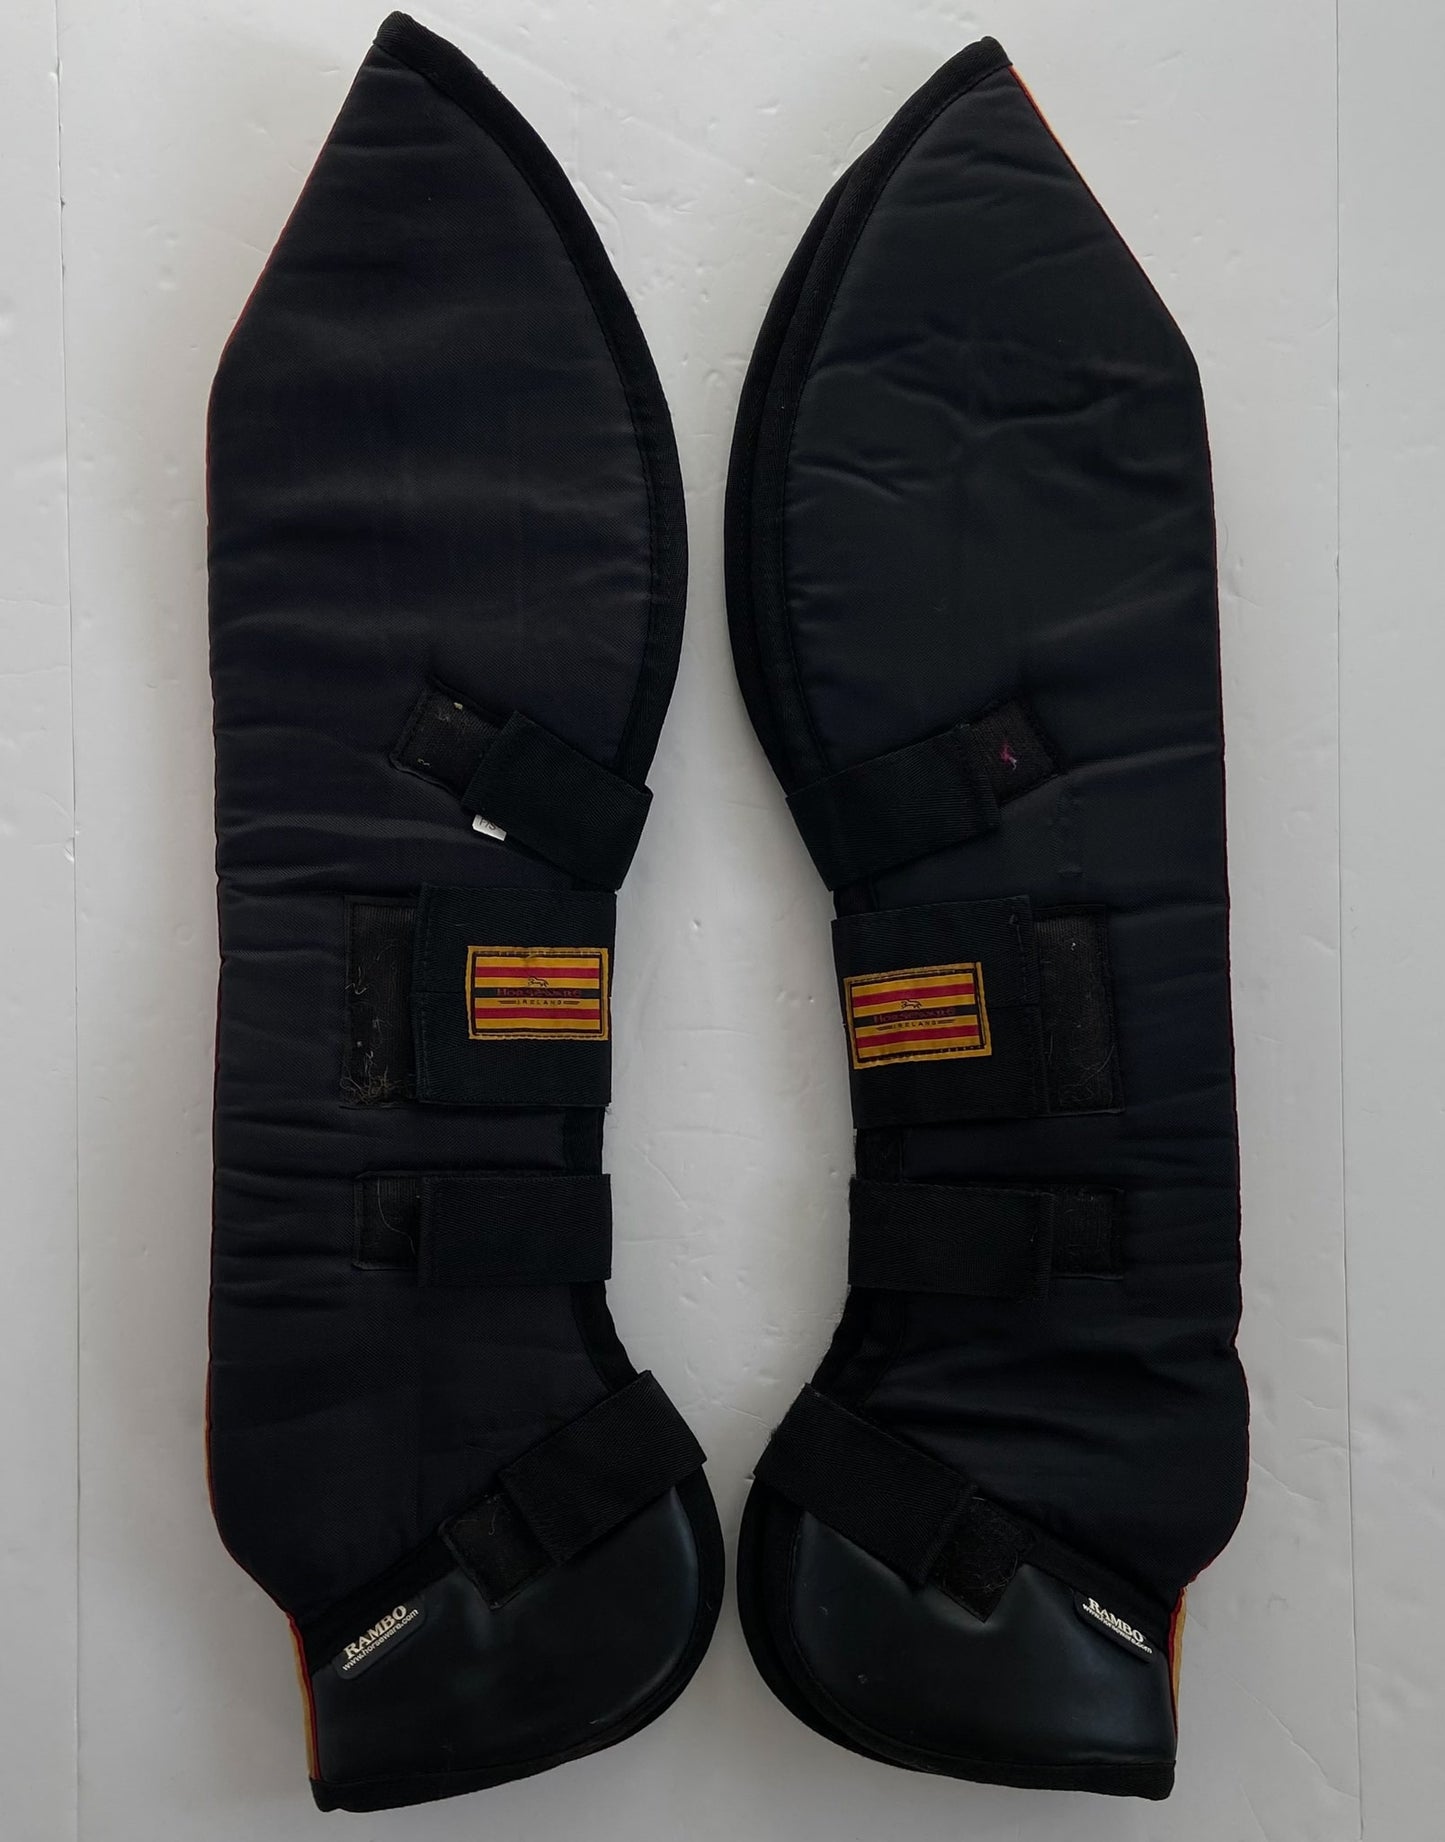 Horseware Ireland Rambo Shipping Boots - Black - Full Size